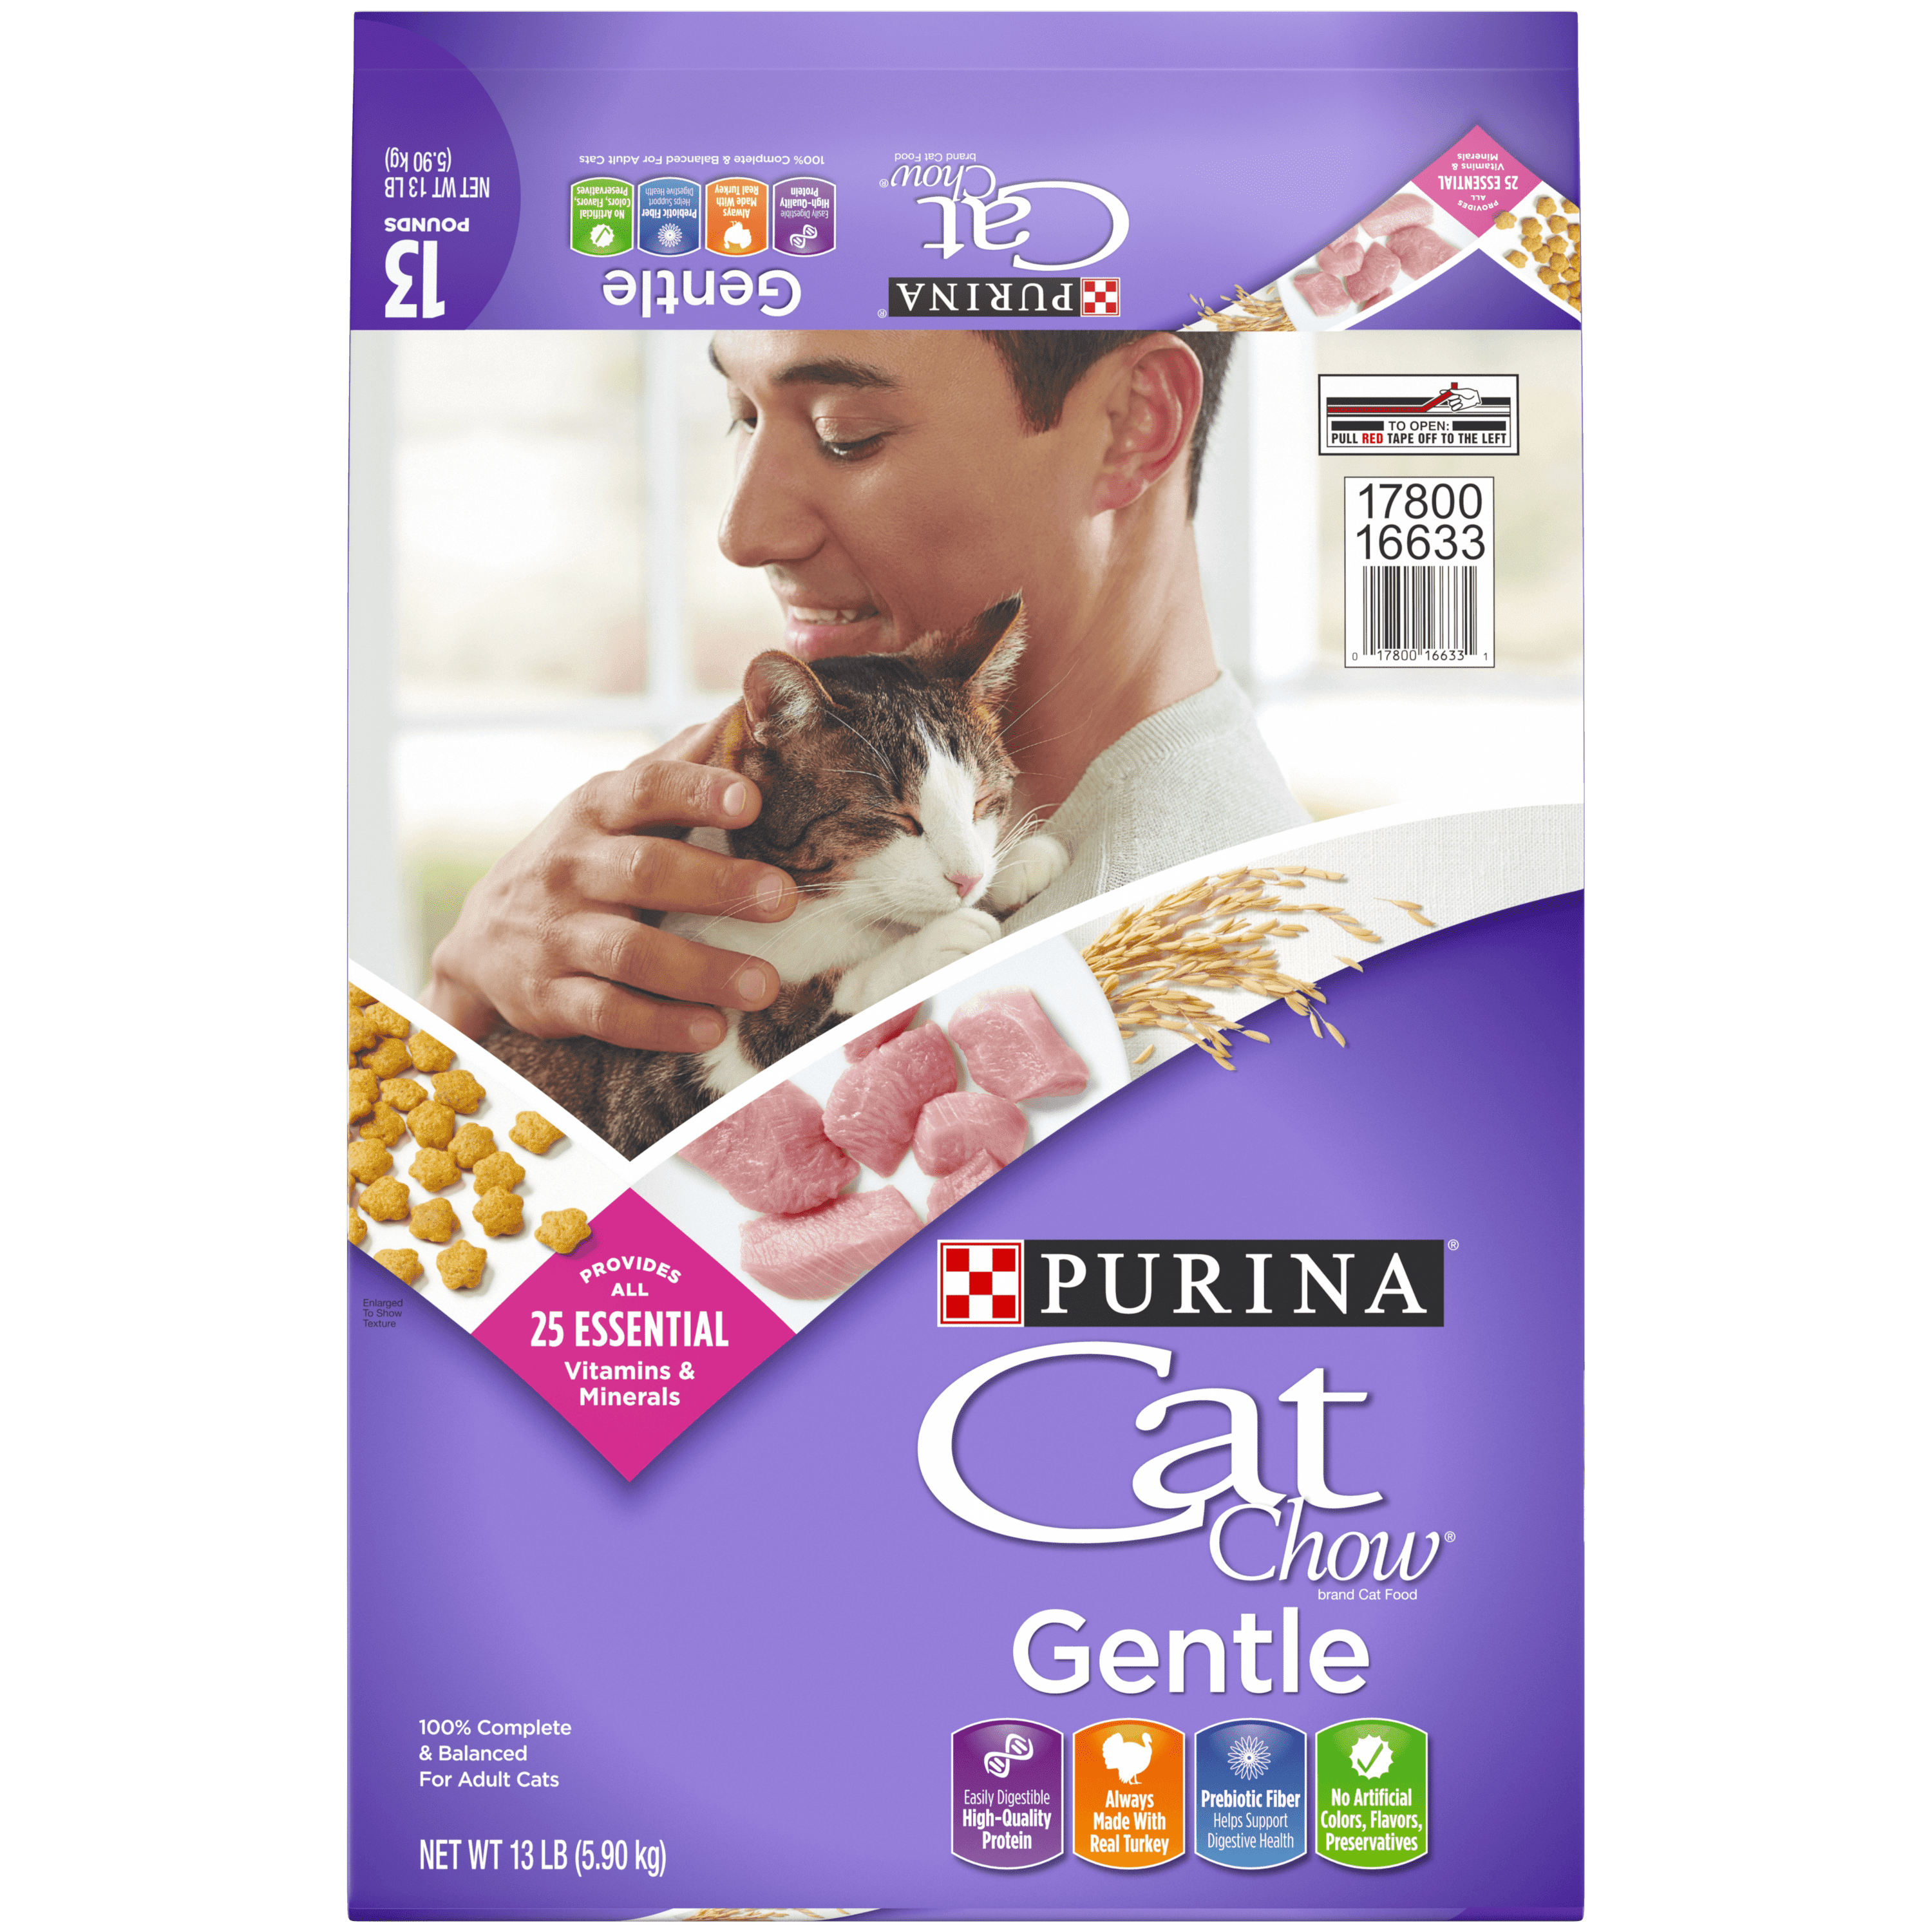 Purina Cat Chow Sensitive Stomach Dry Cat Food Gentle 13 lb. Bag eBay